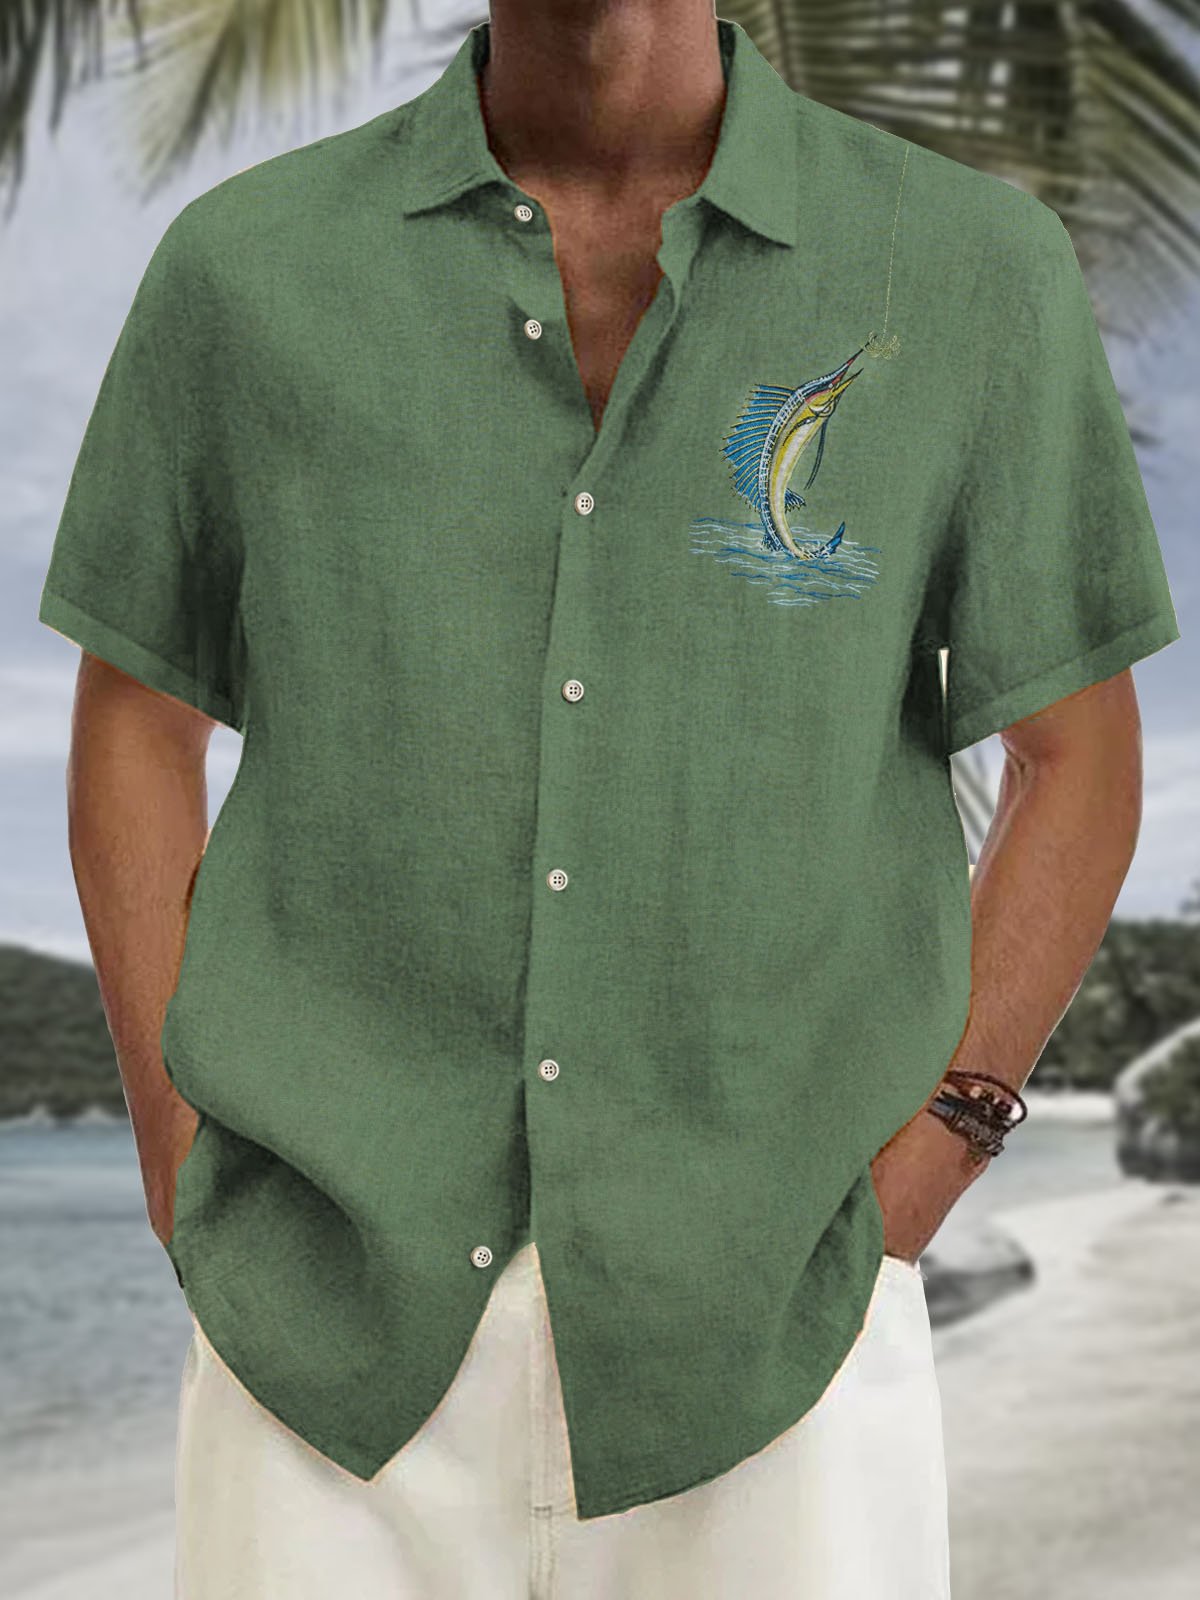  Tropical Ocean Men's Hawaiian Shirts FishTree Coconut Tree Art Oversized Cotton Linen Camp Shirts